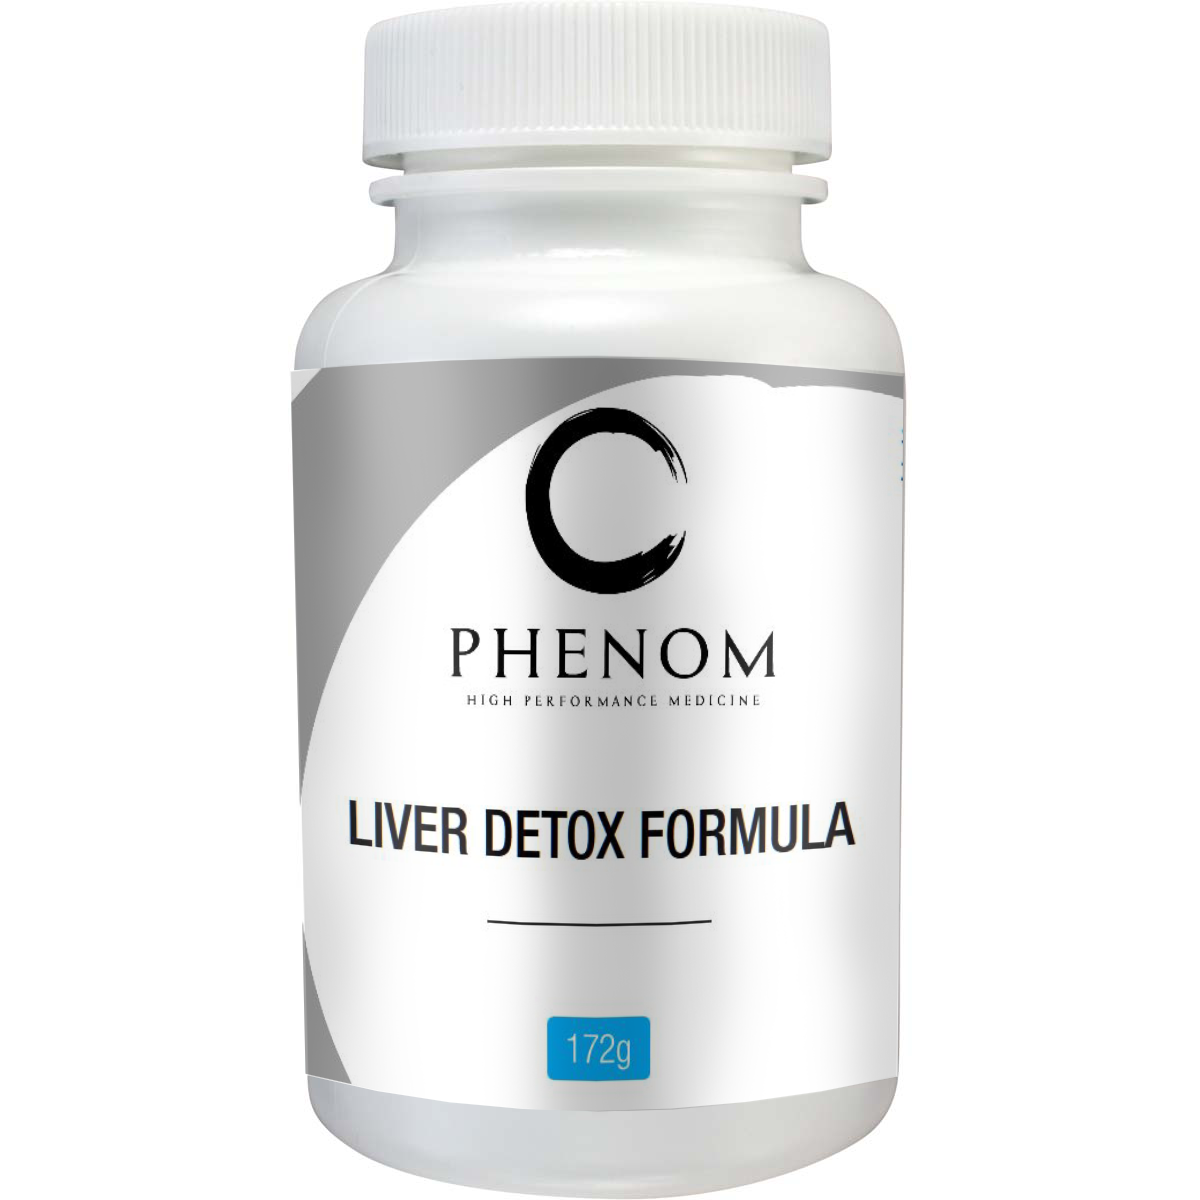 Liver detoxification formula